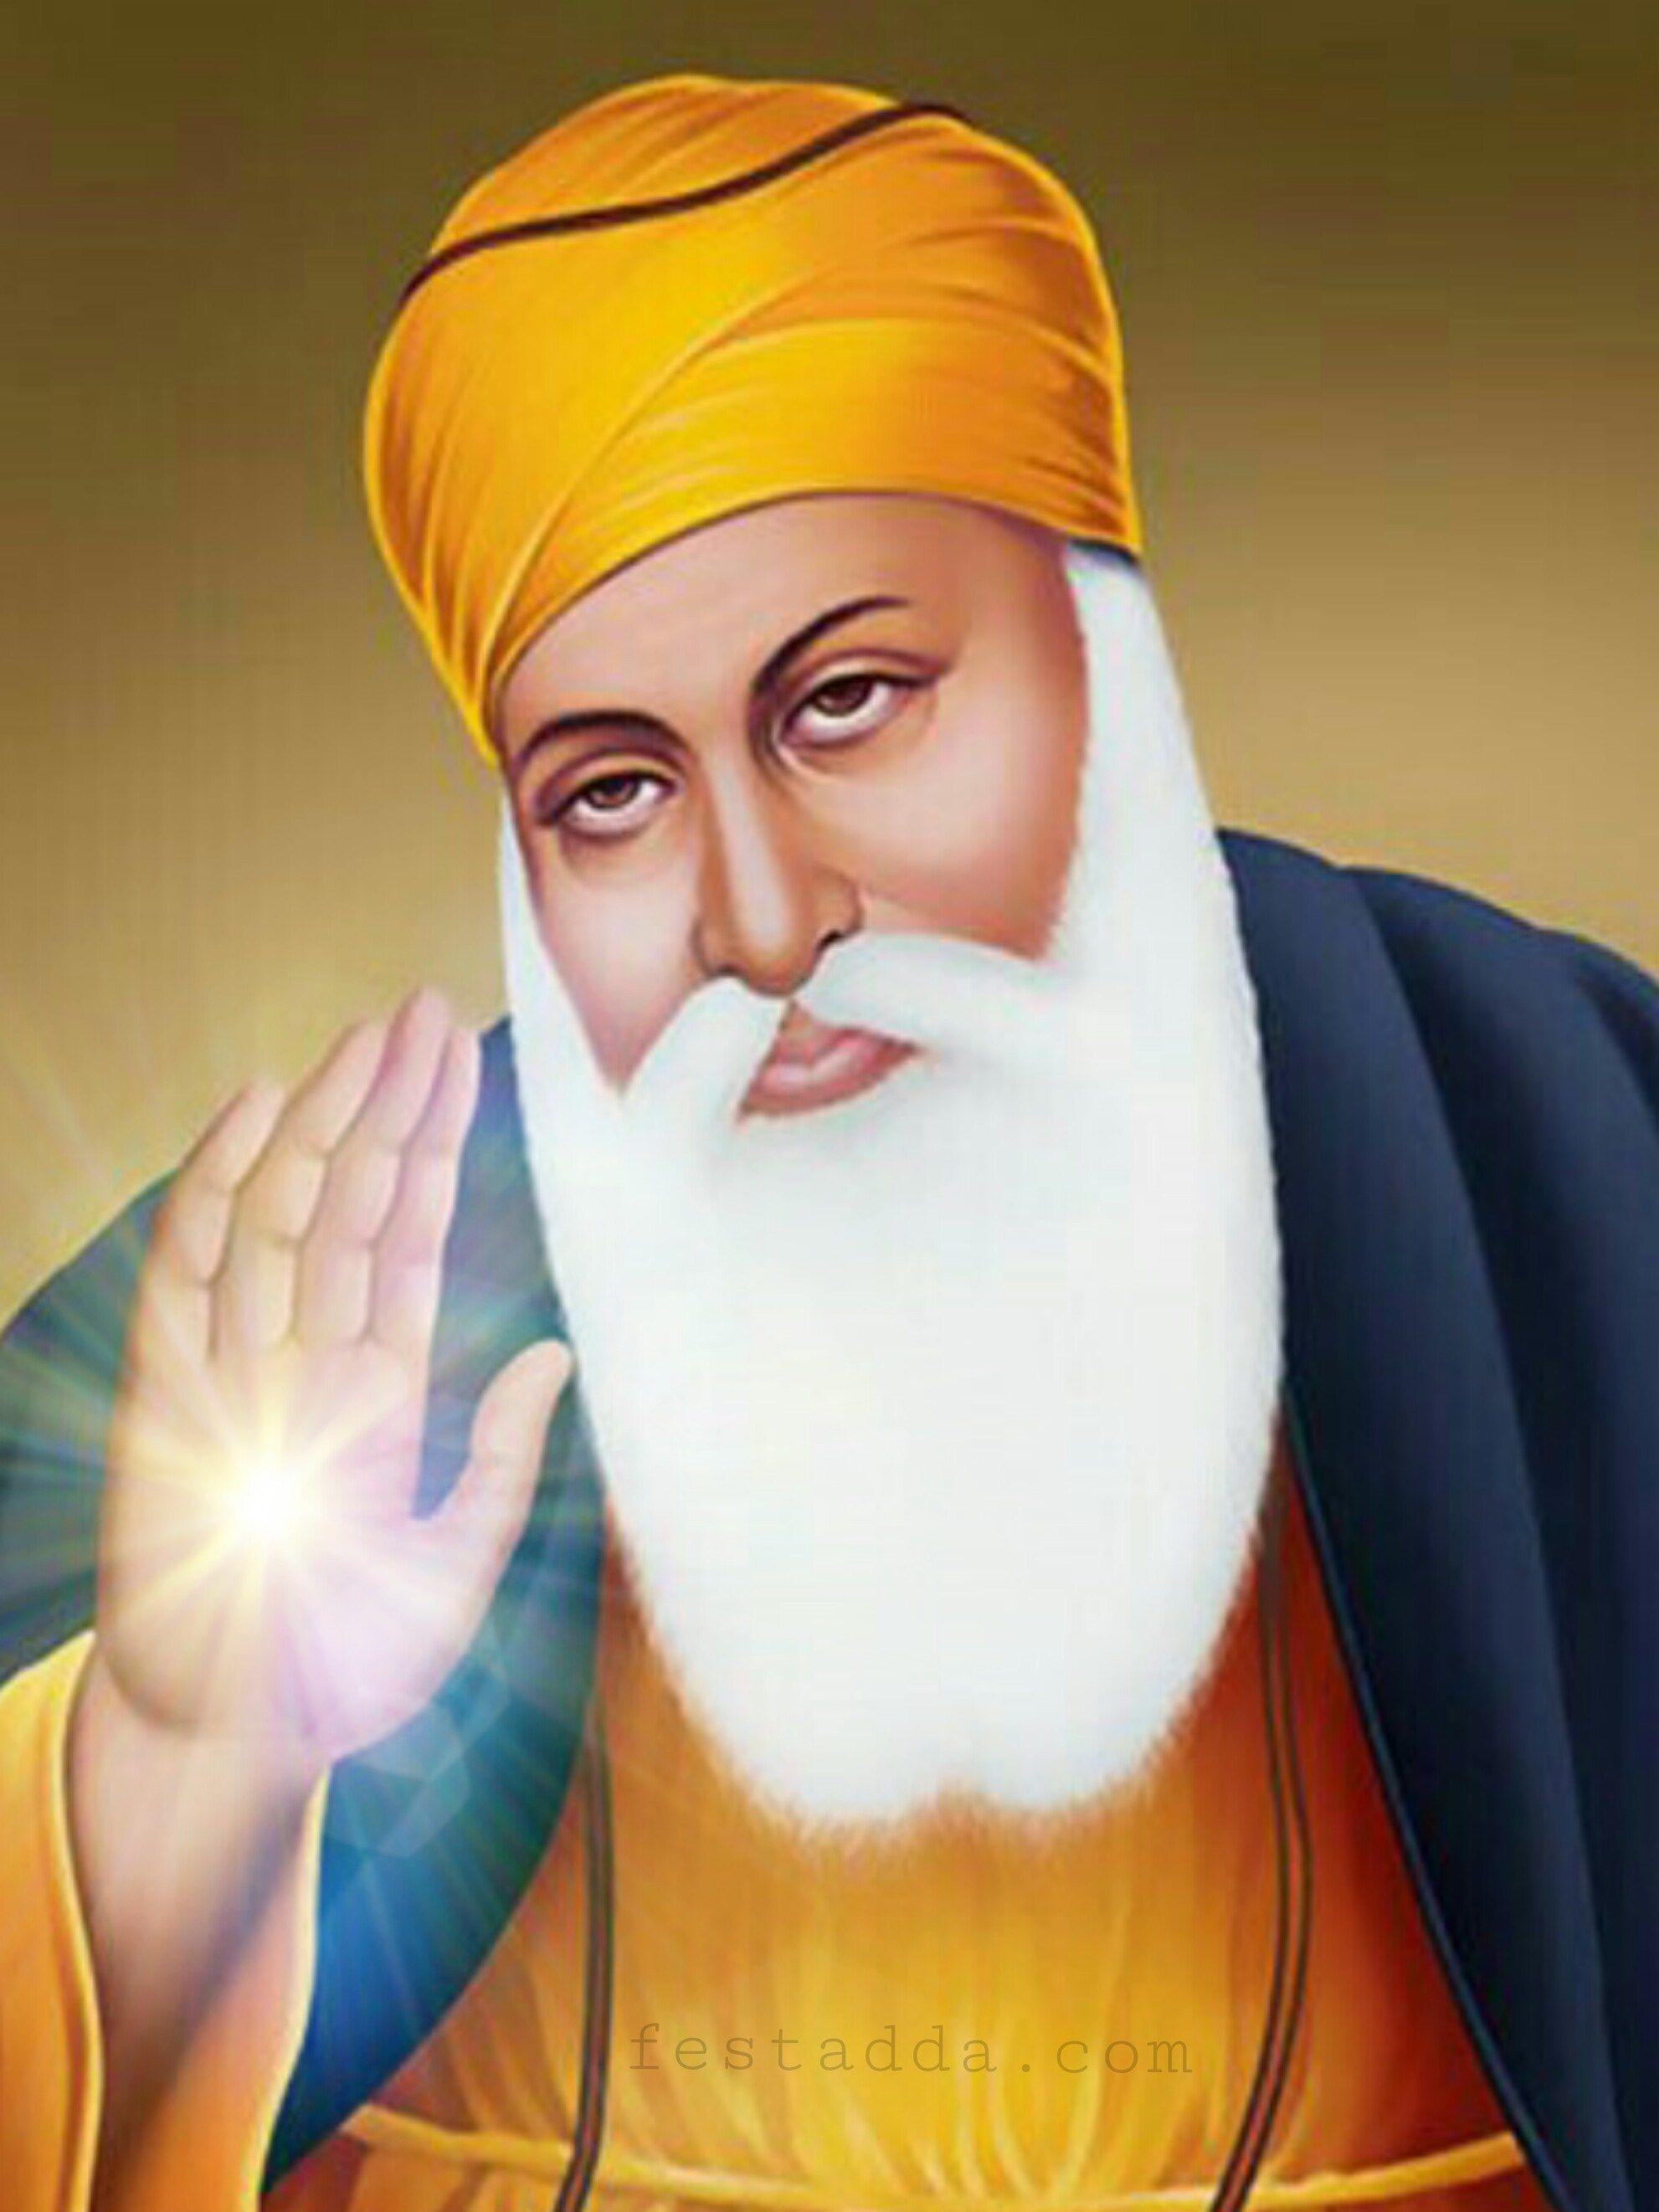 Guru Nanak Wallpaper. Guru Nanak dev ji full HD image, wallpaper